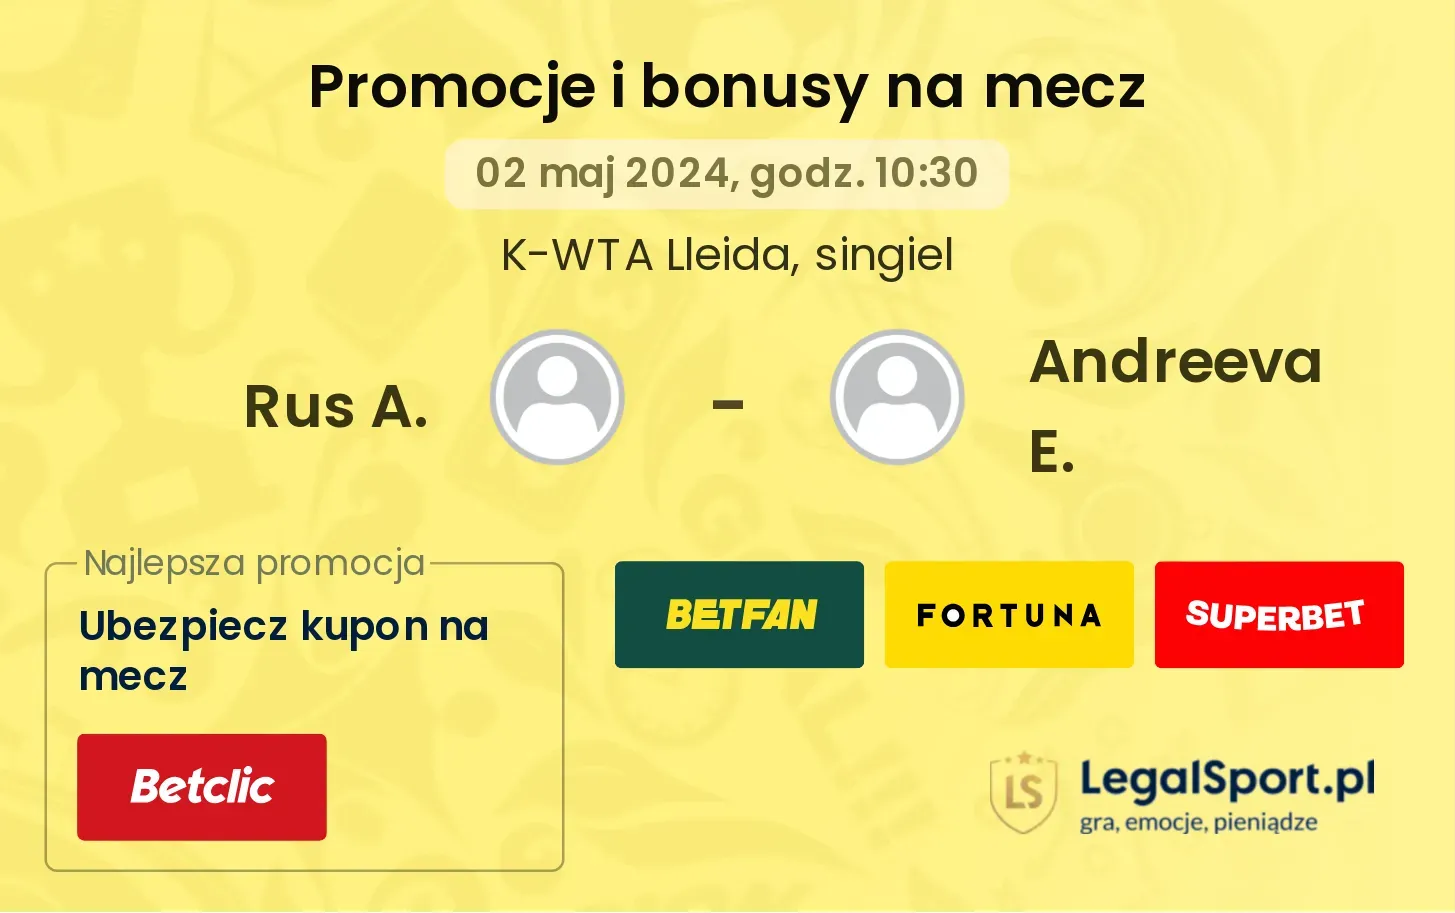 Rus A. - Andreeva E. promocje bonusy na mecz